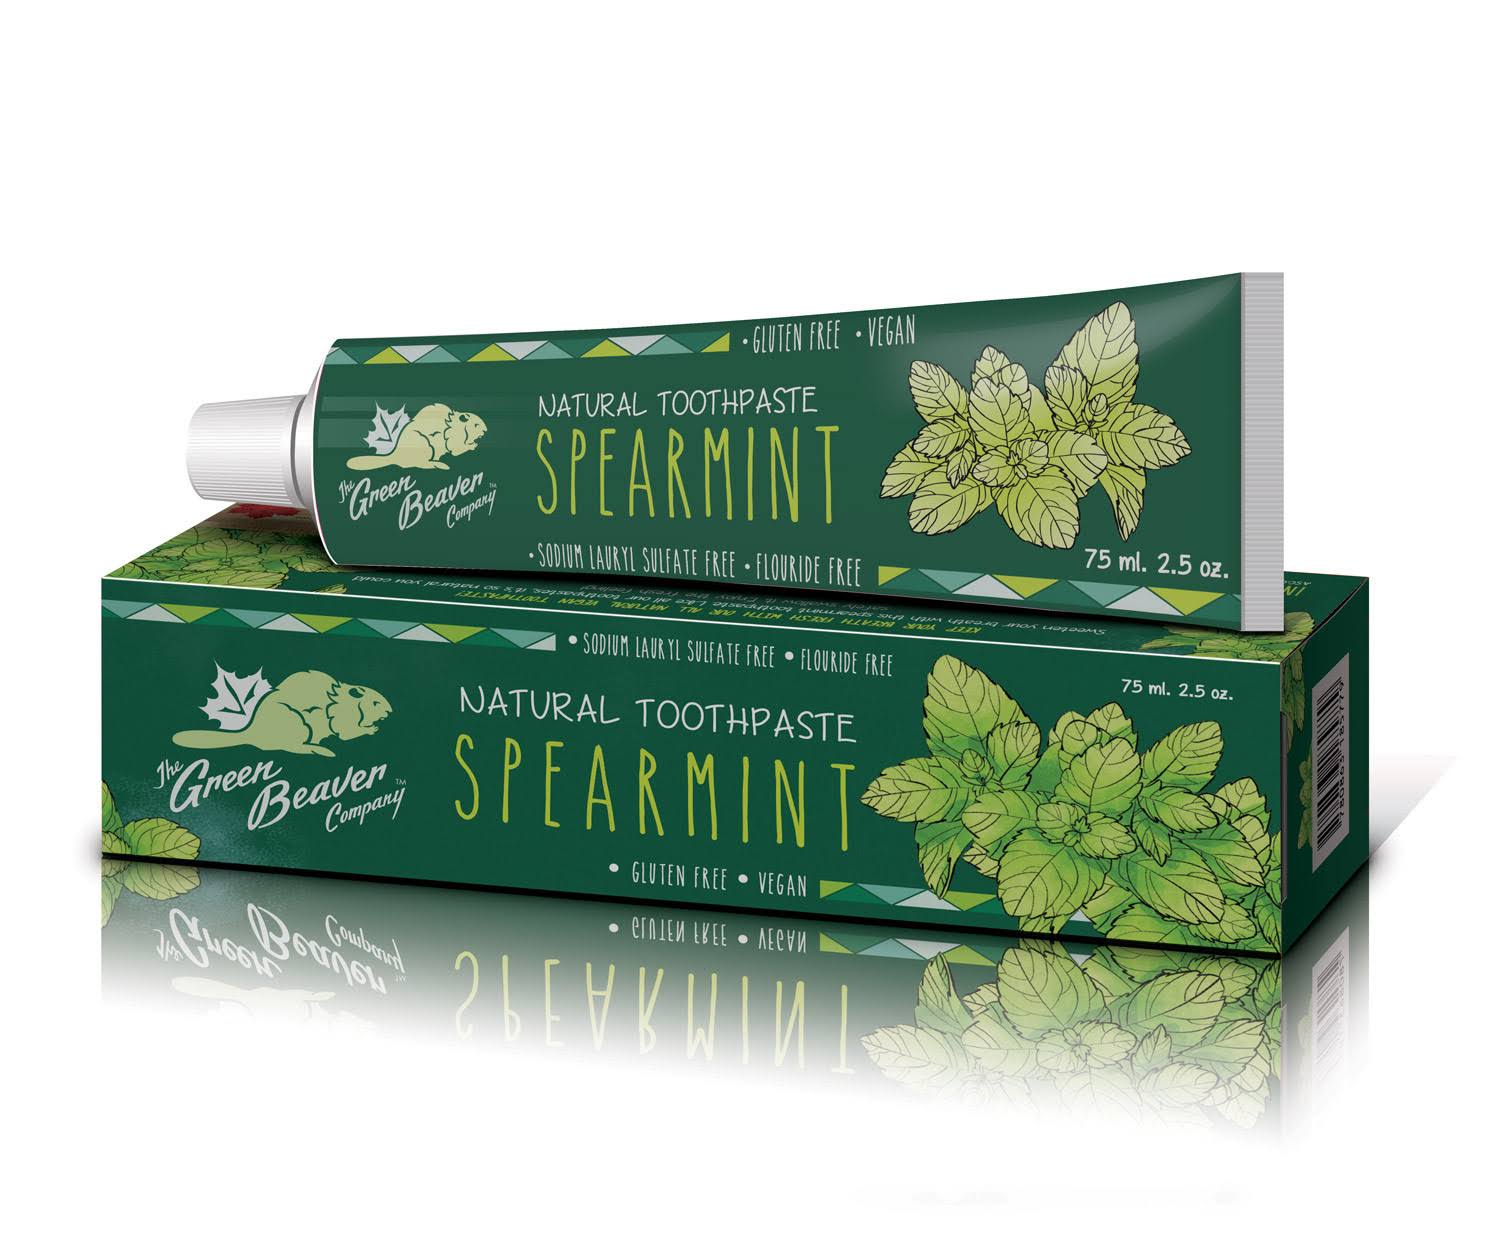 Green Beaver Natural Toothpaste, Spearmint 2.5 FL oz